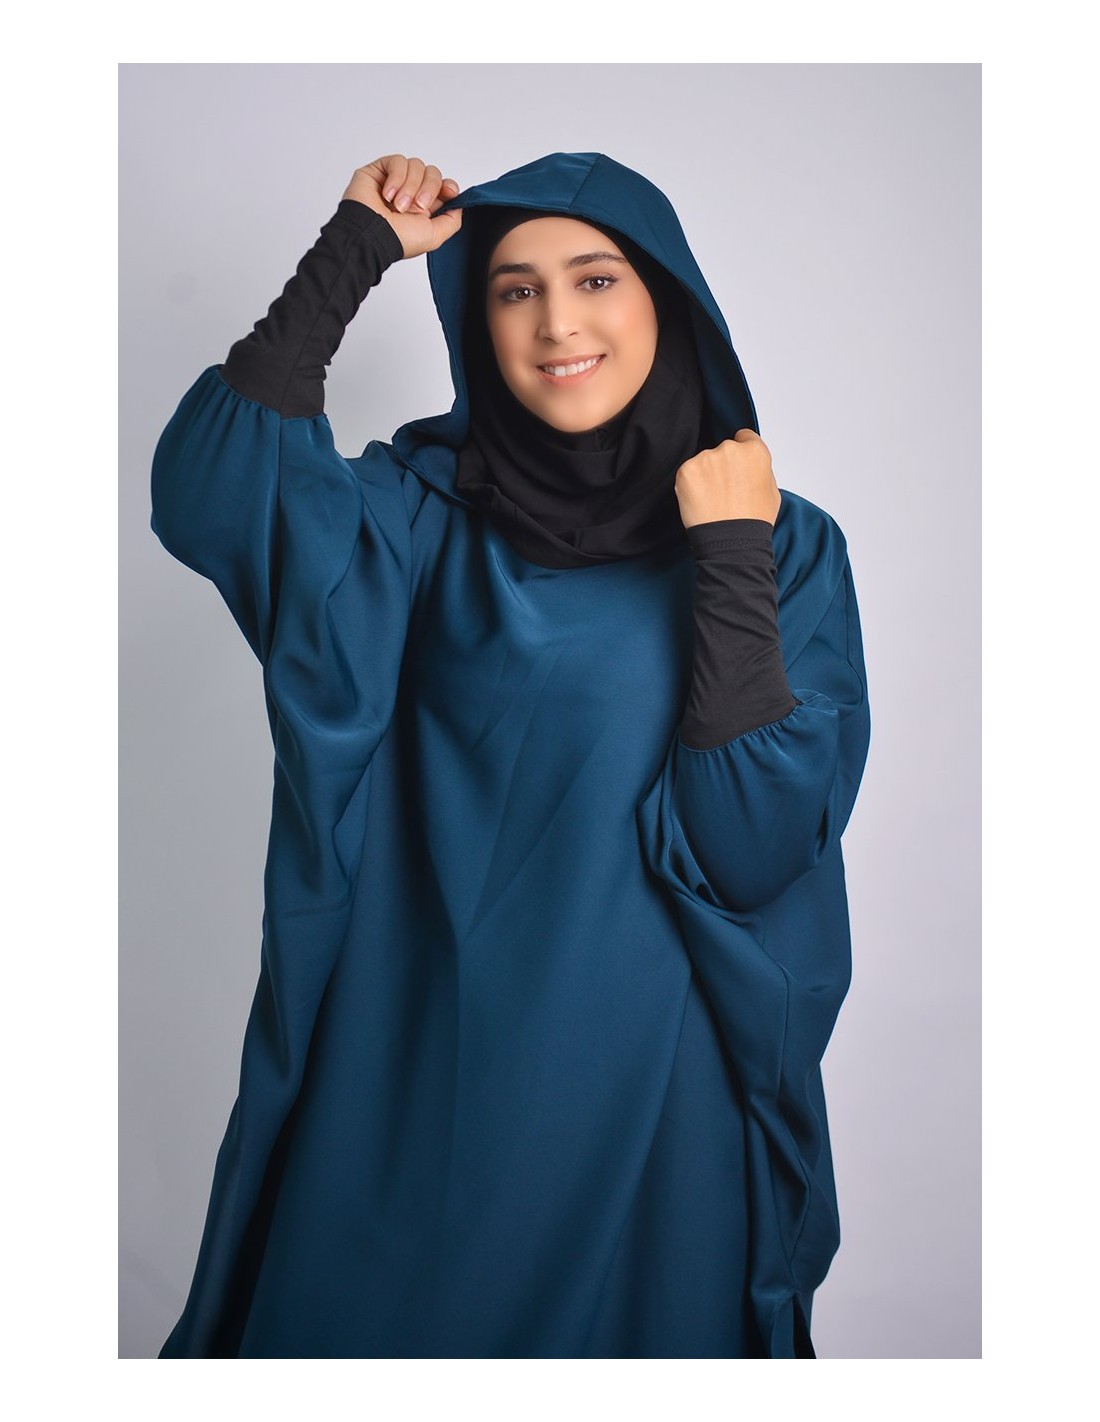 Túnica joven: hiyab y capucha incorporada